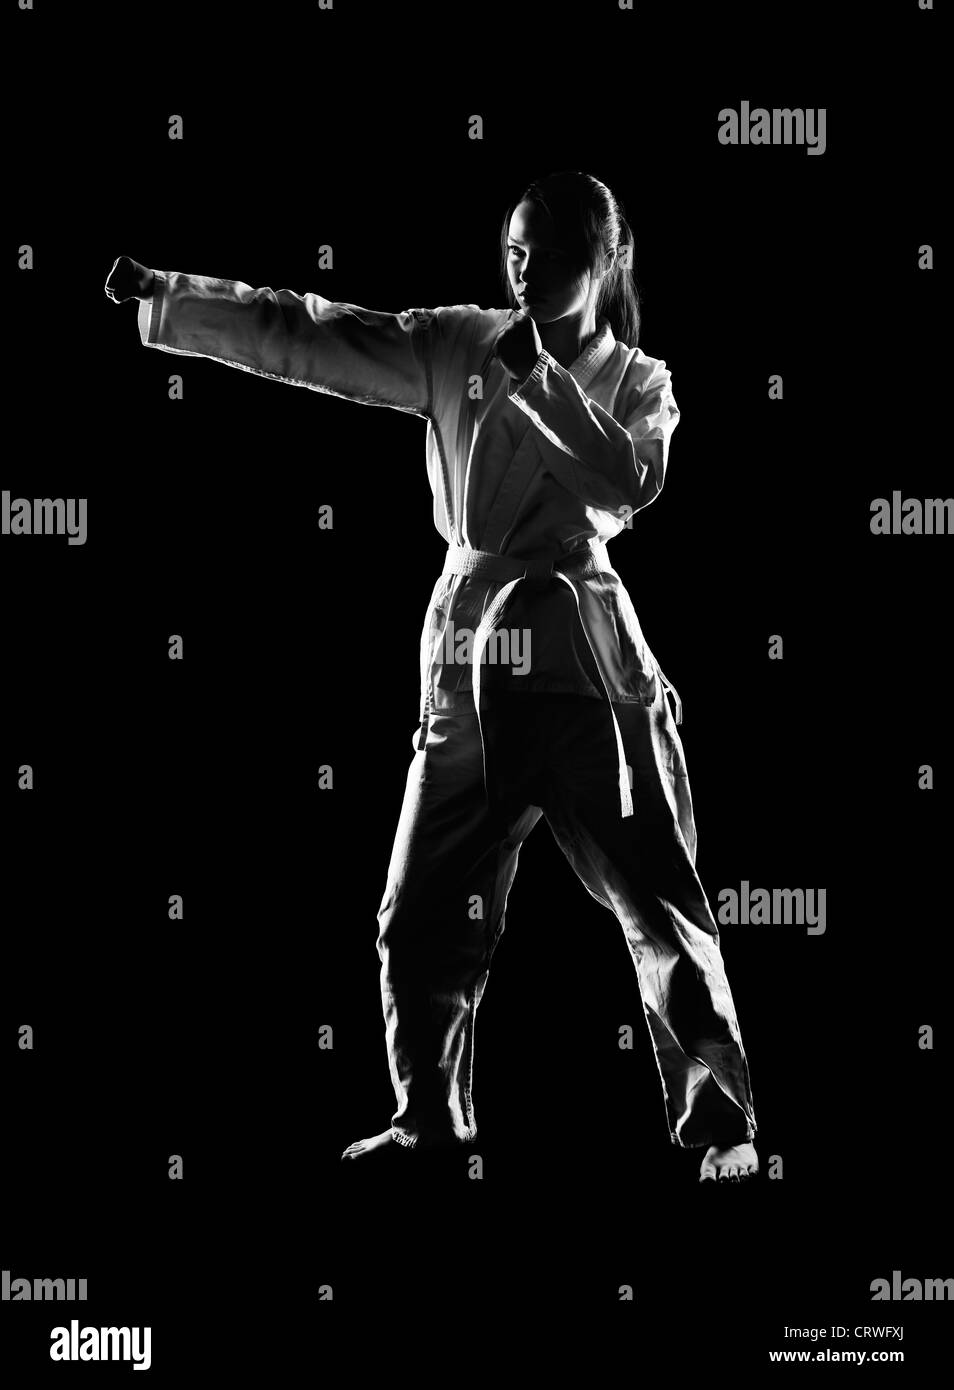 Women self defense Black and White Stock Photos & Images - Alamy